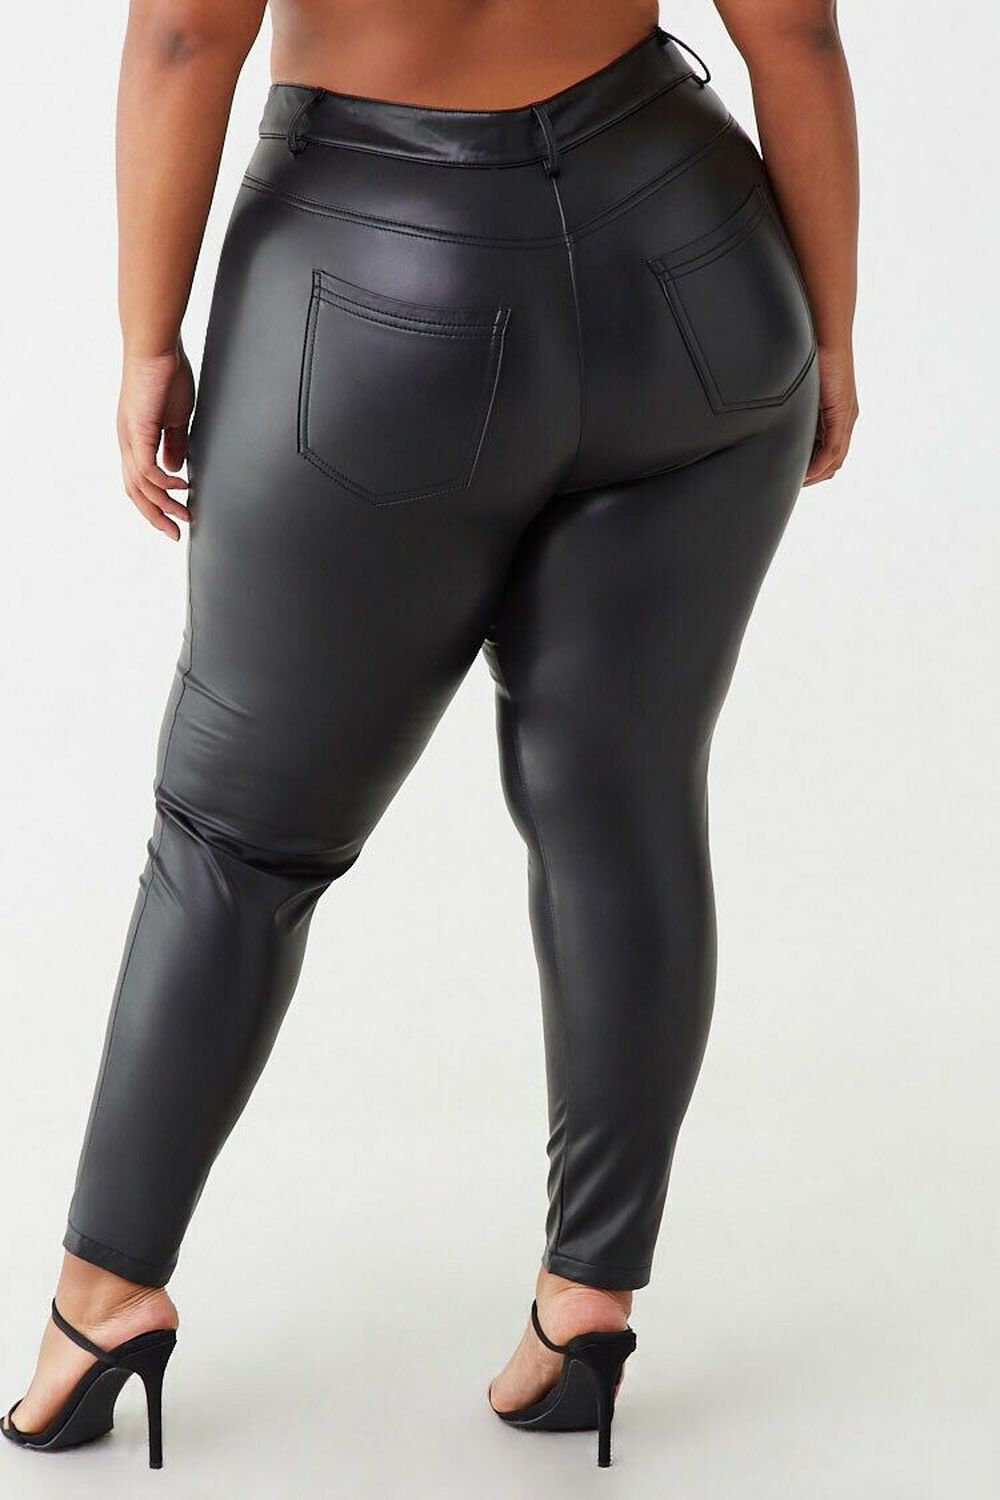 Women's Skinny Faux Leather Pants XS-5XL Plus Size Elastic Waist